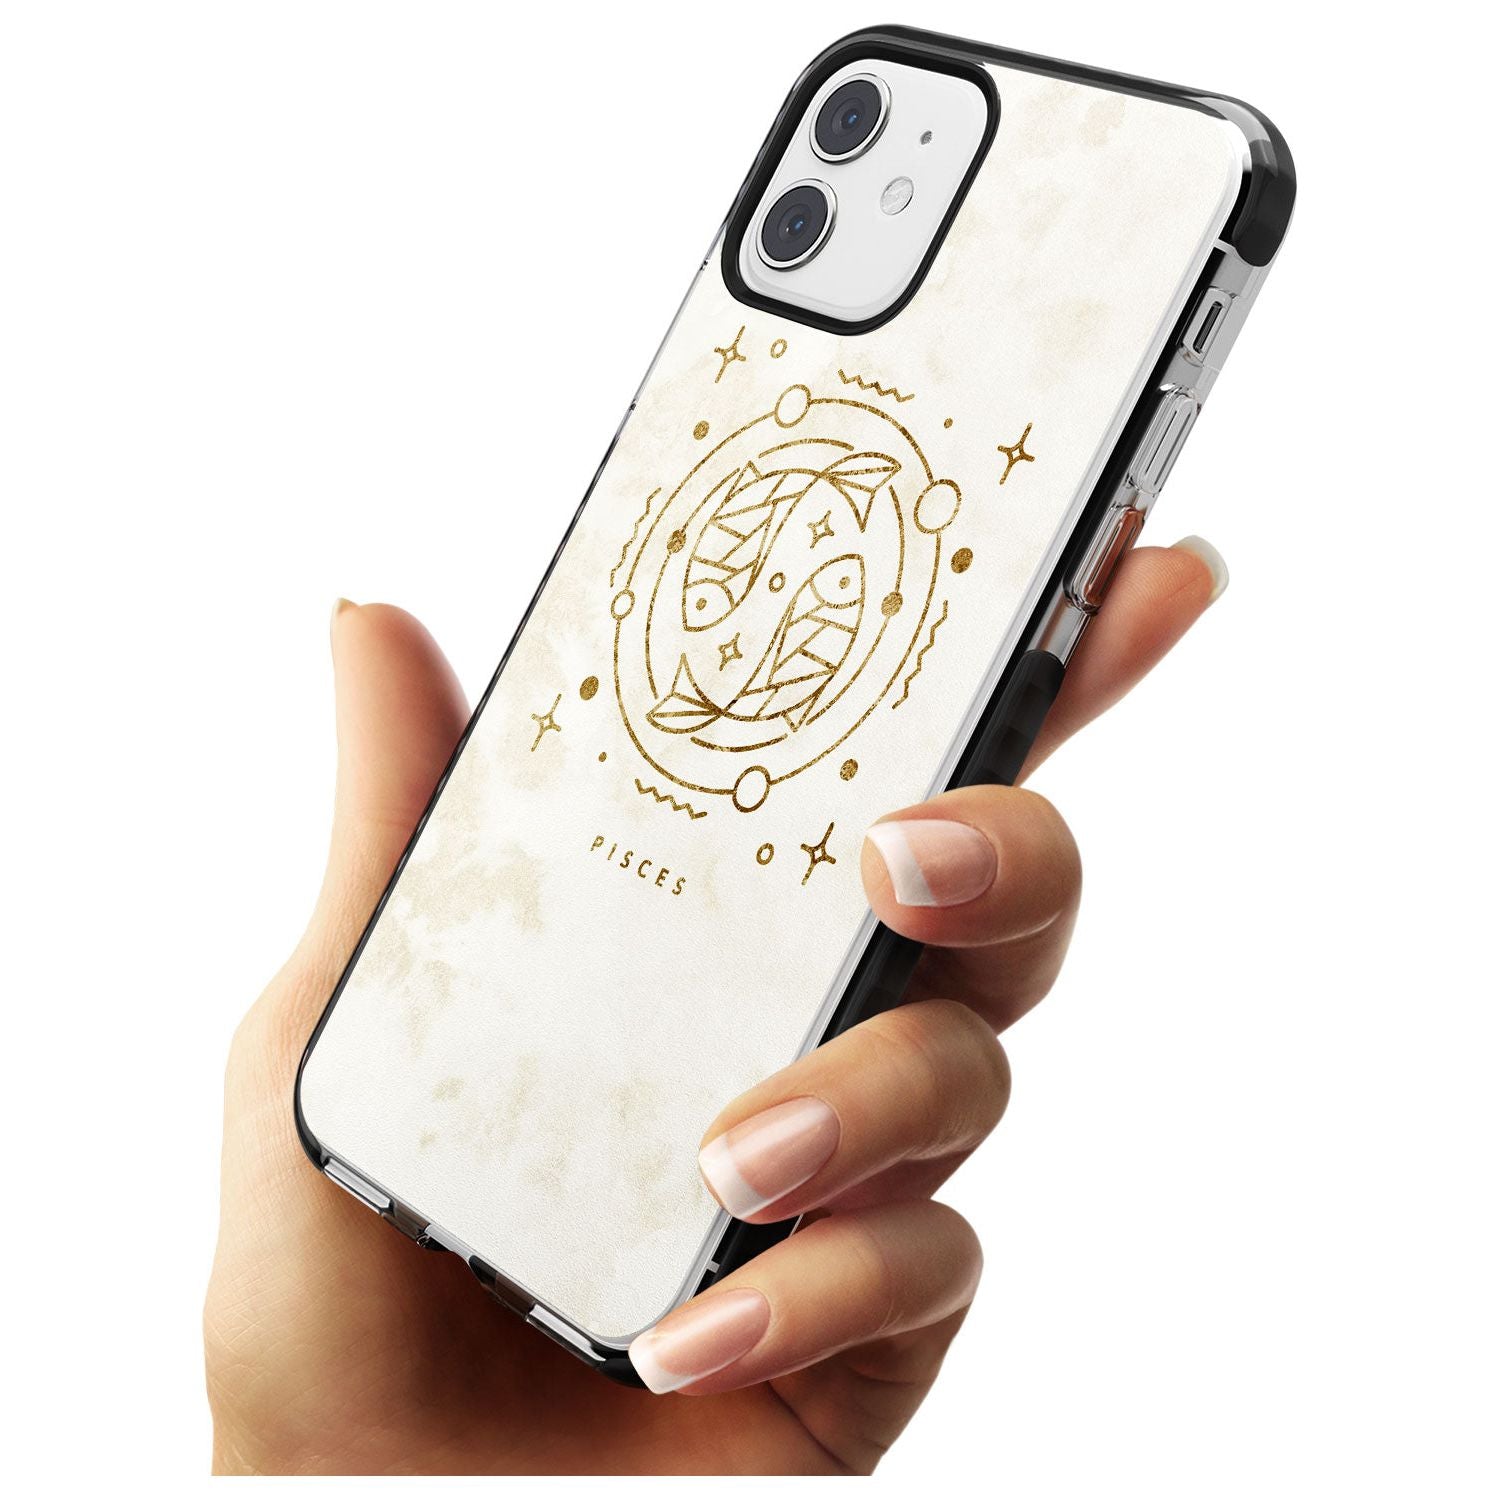 Pisces Emblem - Solid Gold Marbled Design Black Impact Phone Case for iPhone 11